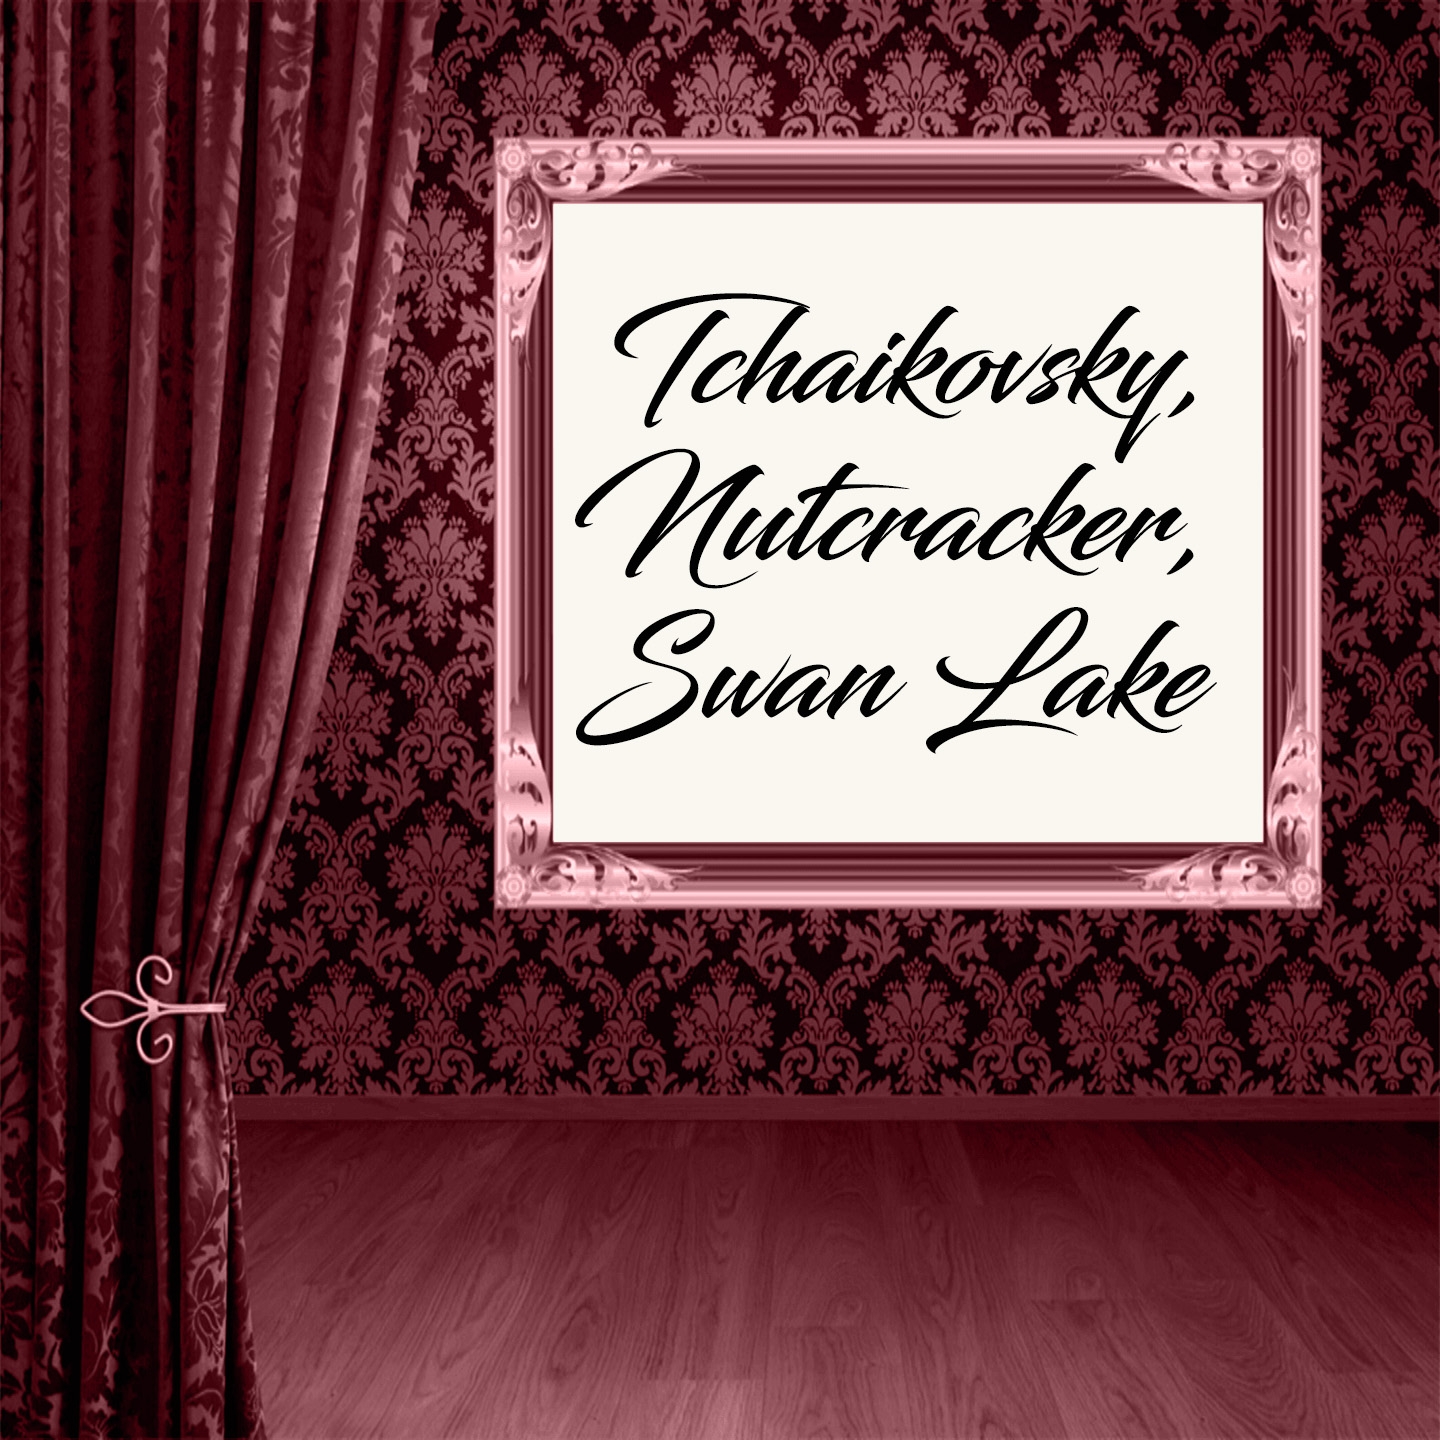 Tchaikovsky, Nutcracker, Swan Lake